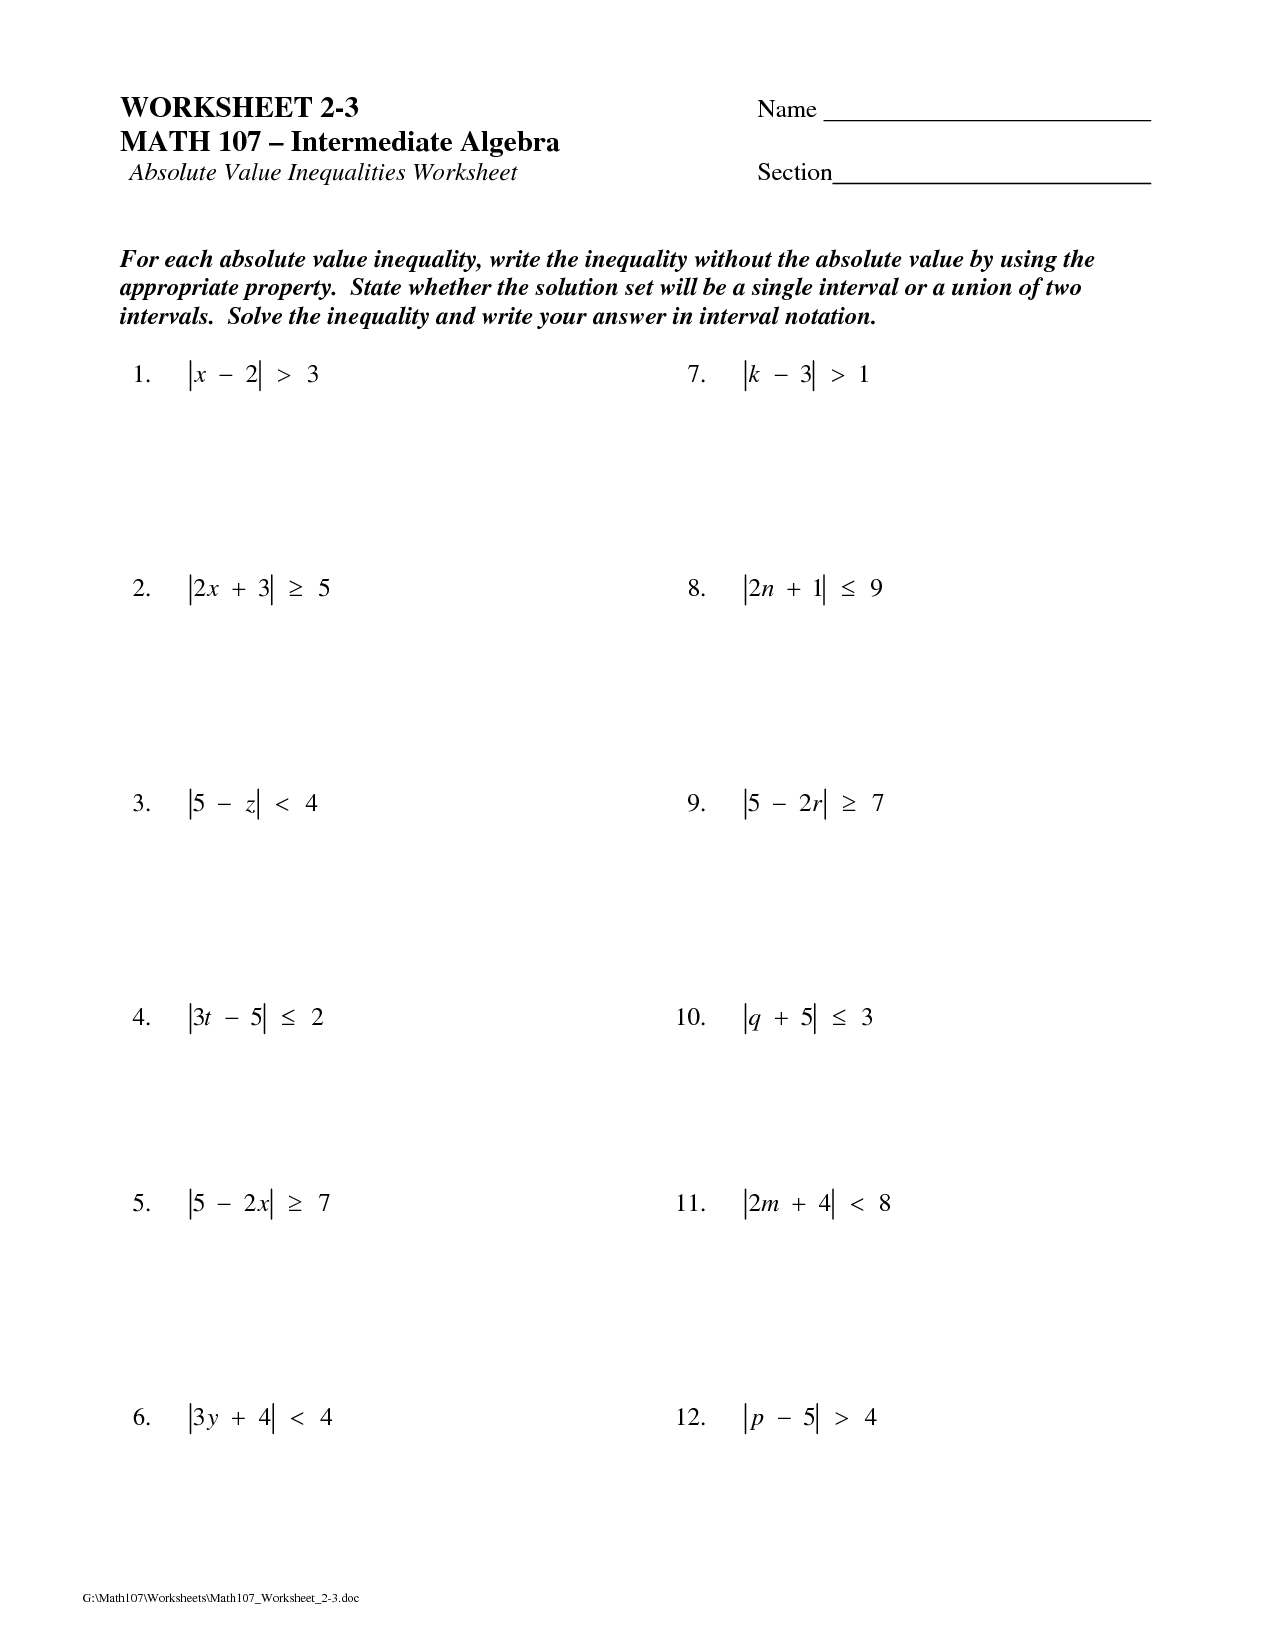 GED Math Practice Worksheets Printable Image